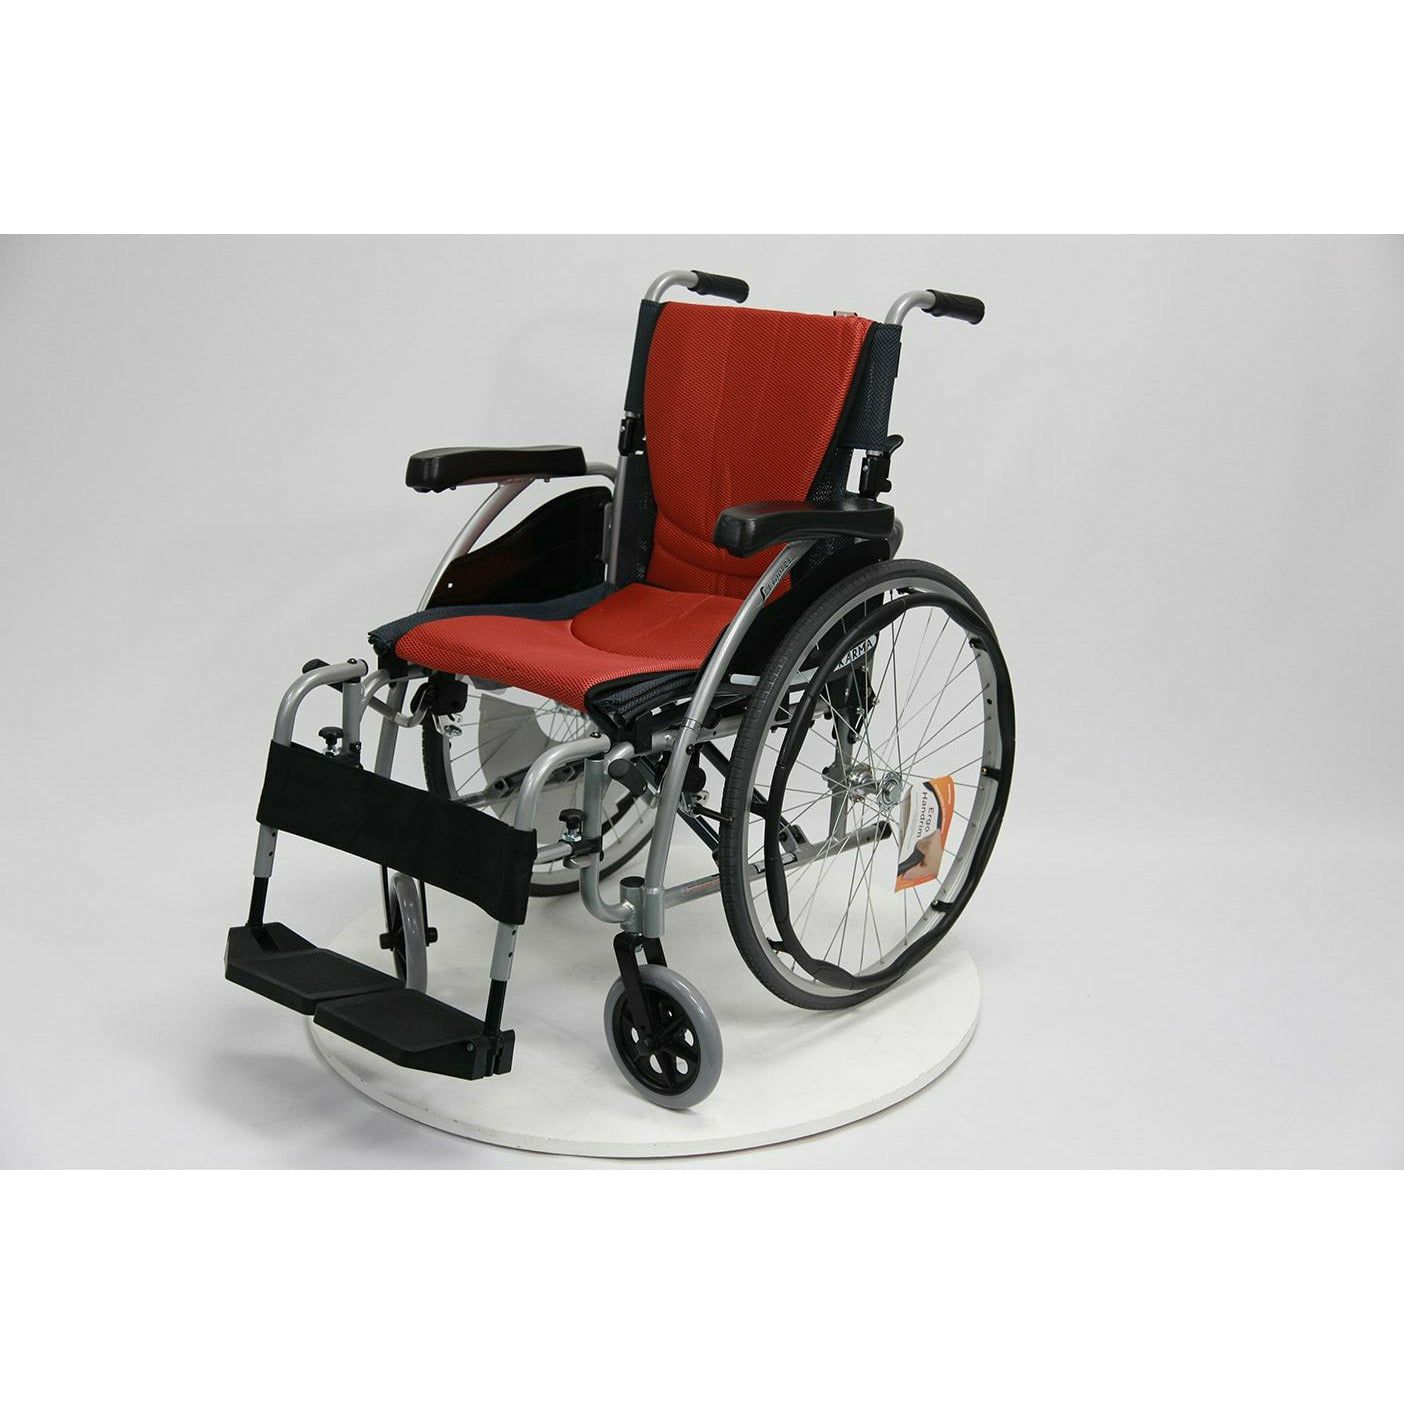 Karman Healthcare S-Ergo 125 Flip-Back Armrest Ergonomic Manual Wheelchair